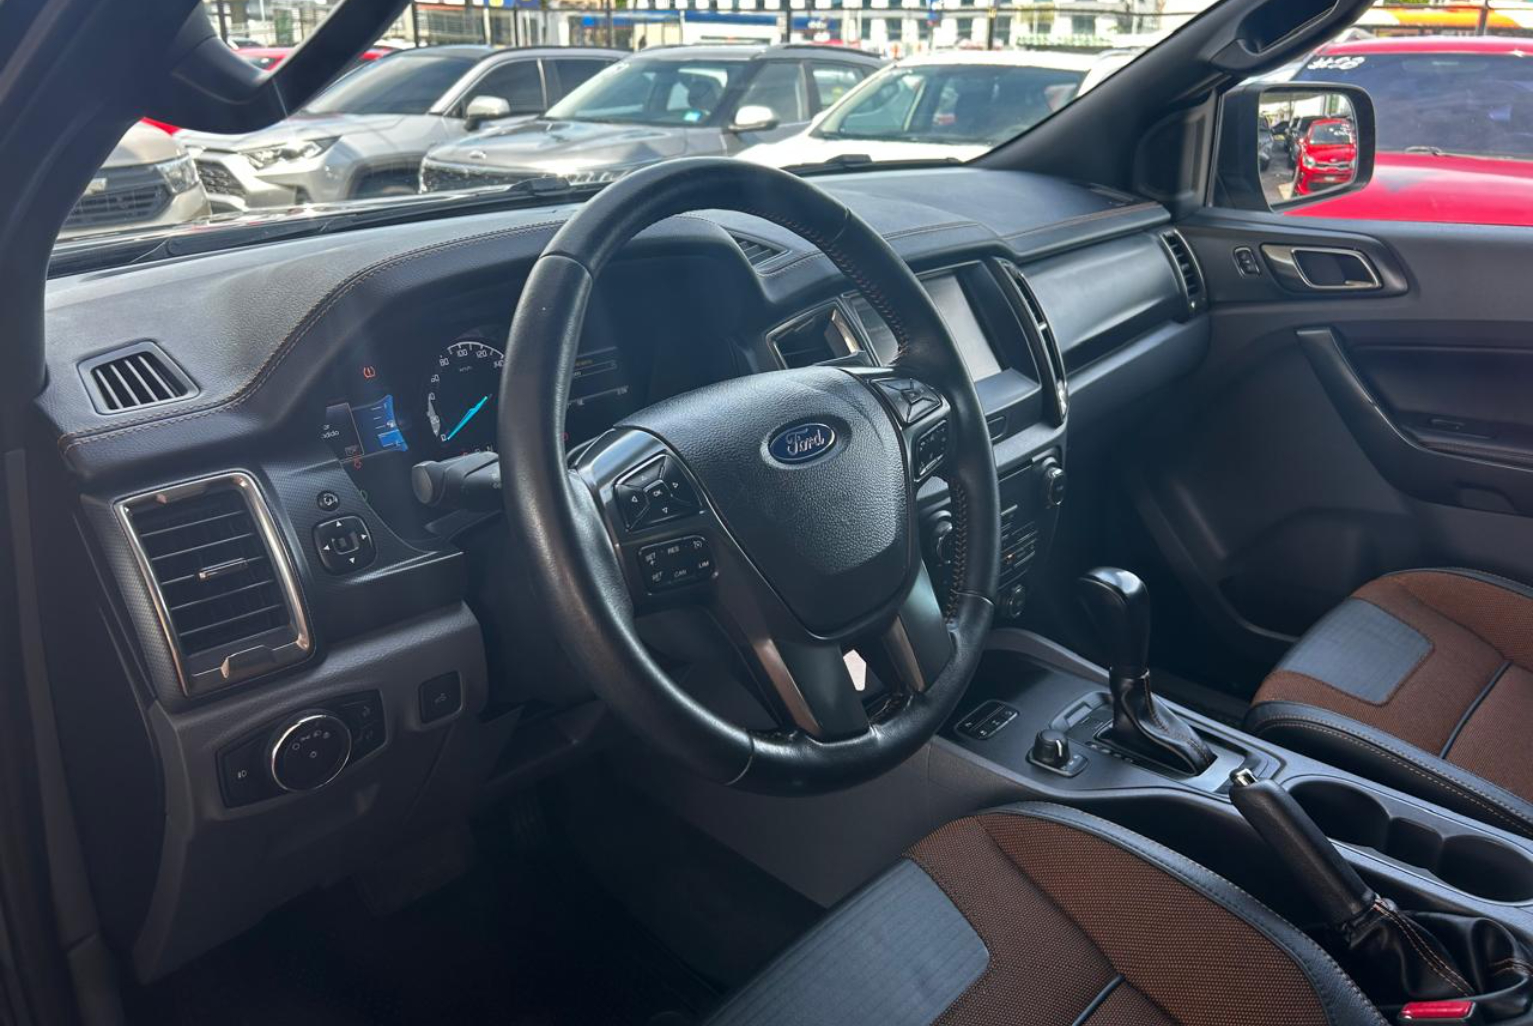 Ford Ranger 2016 Automático color Negro, Imagen #8